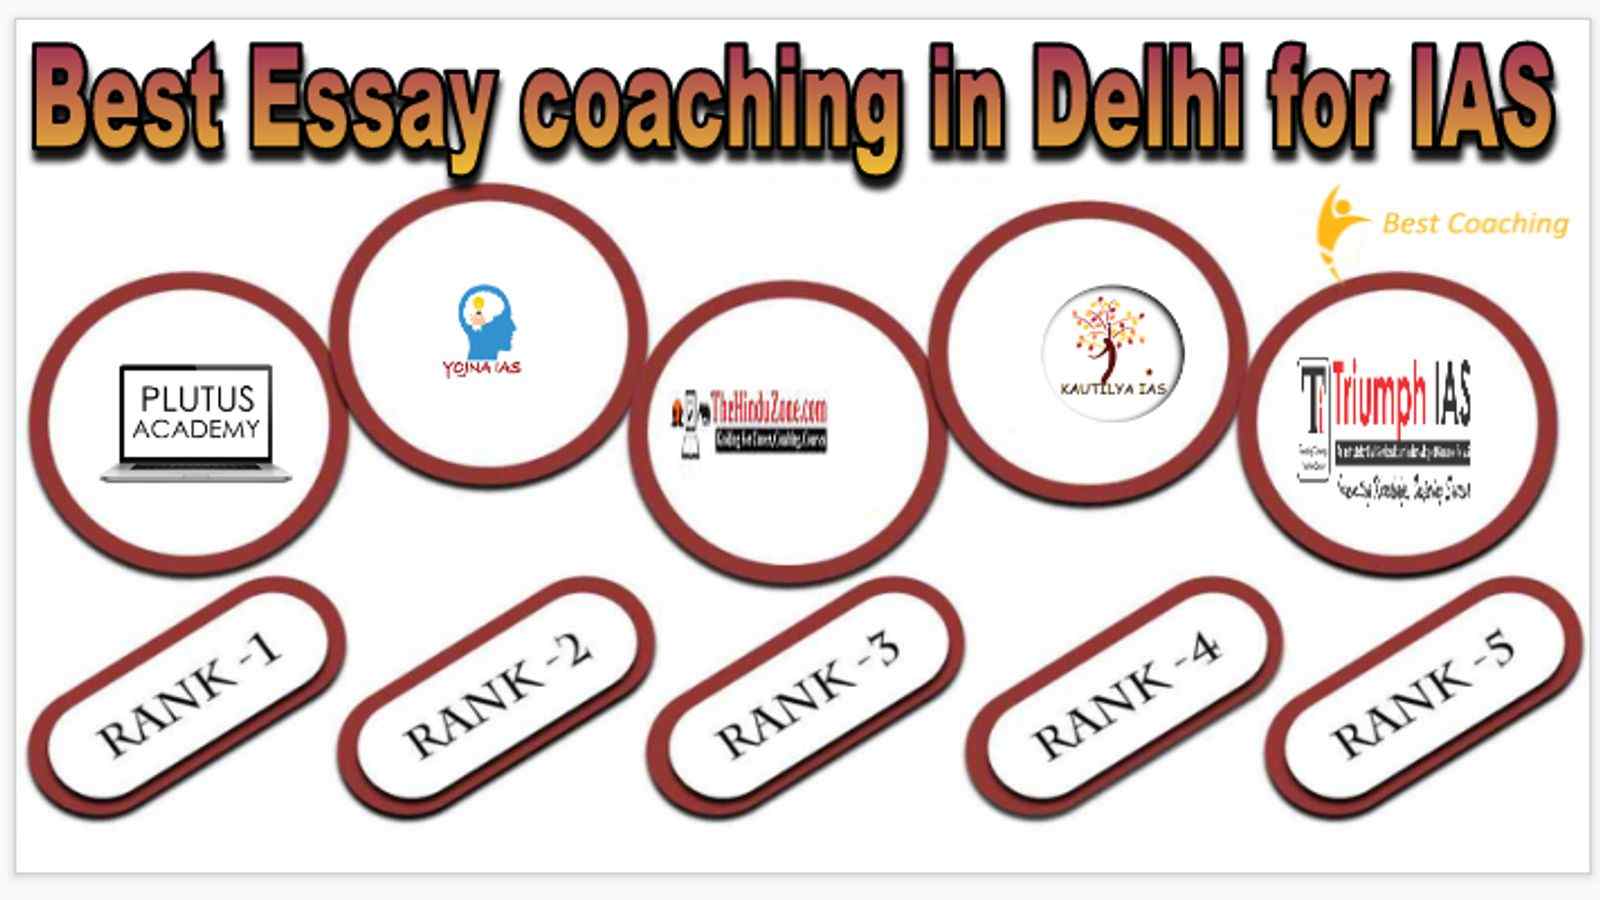 Best essay coaching in Delhi for IAS